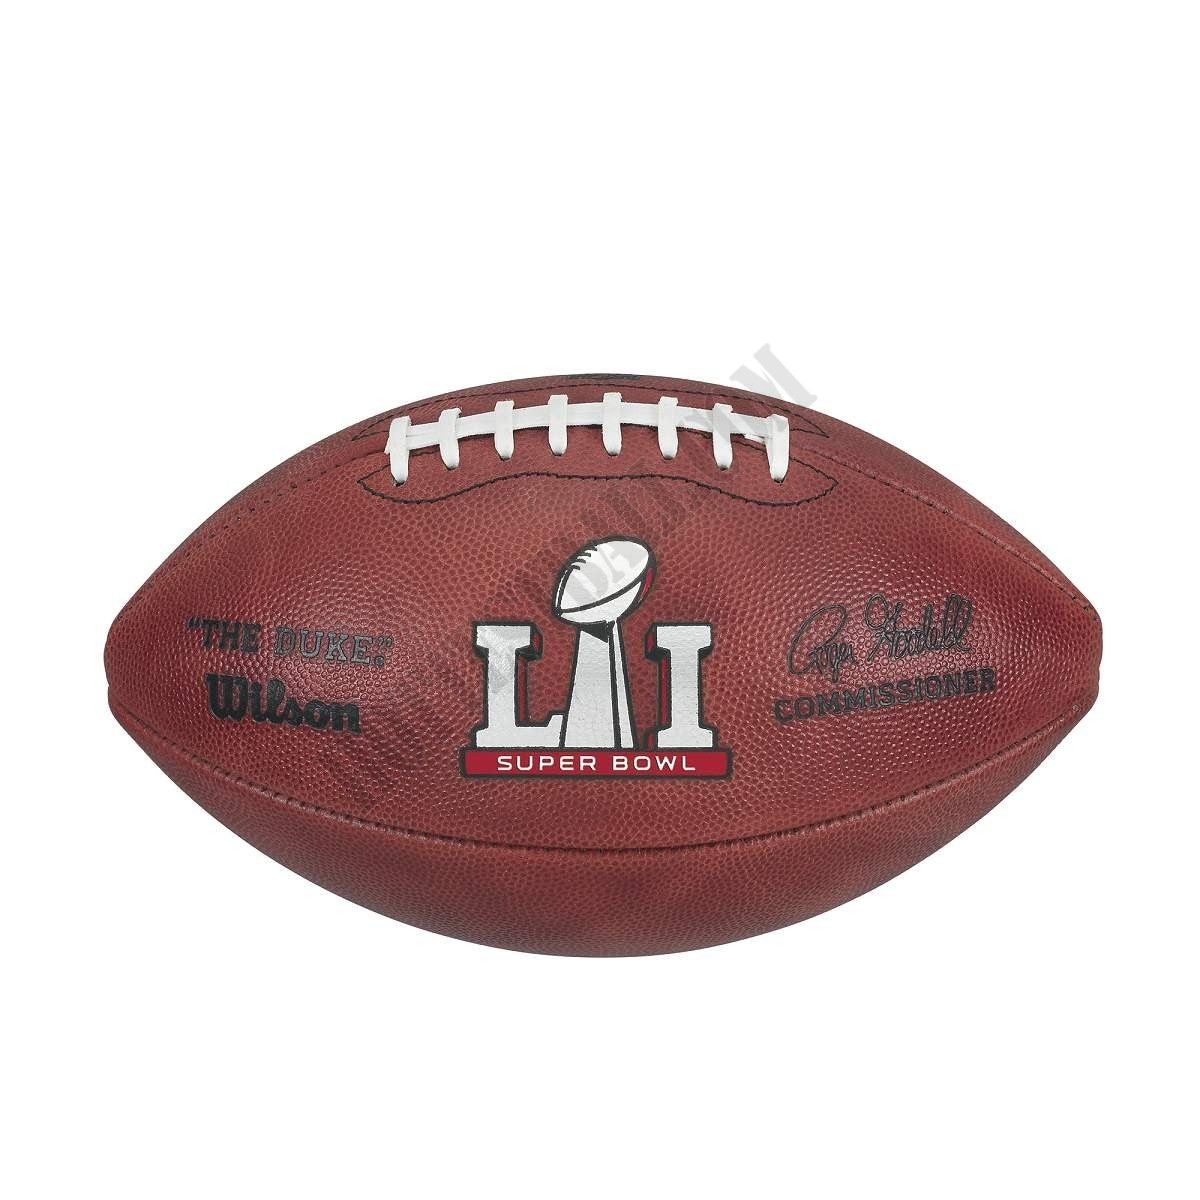 Super Bowl LI Game Football - New England Patriots ● Wilson Promotions - -0